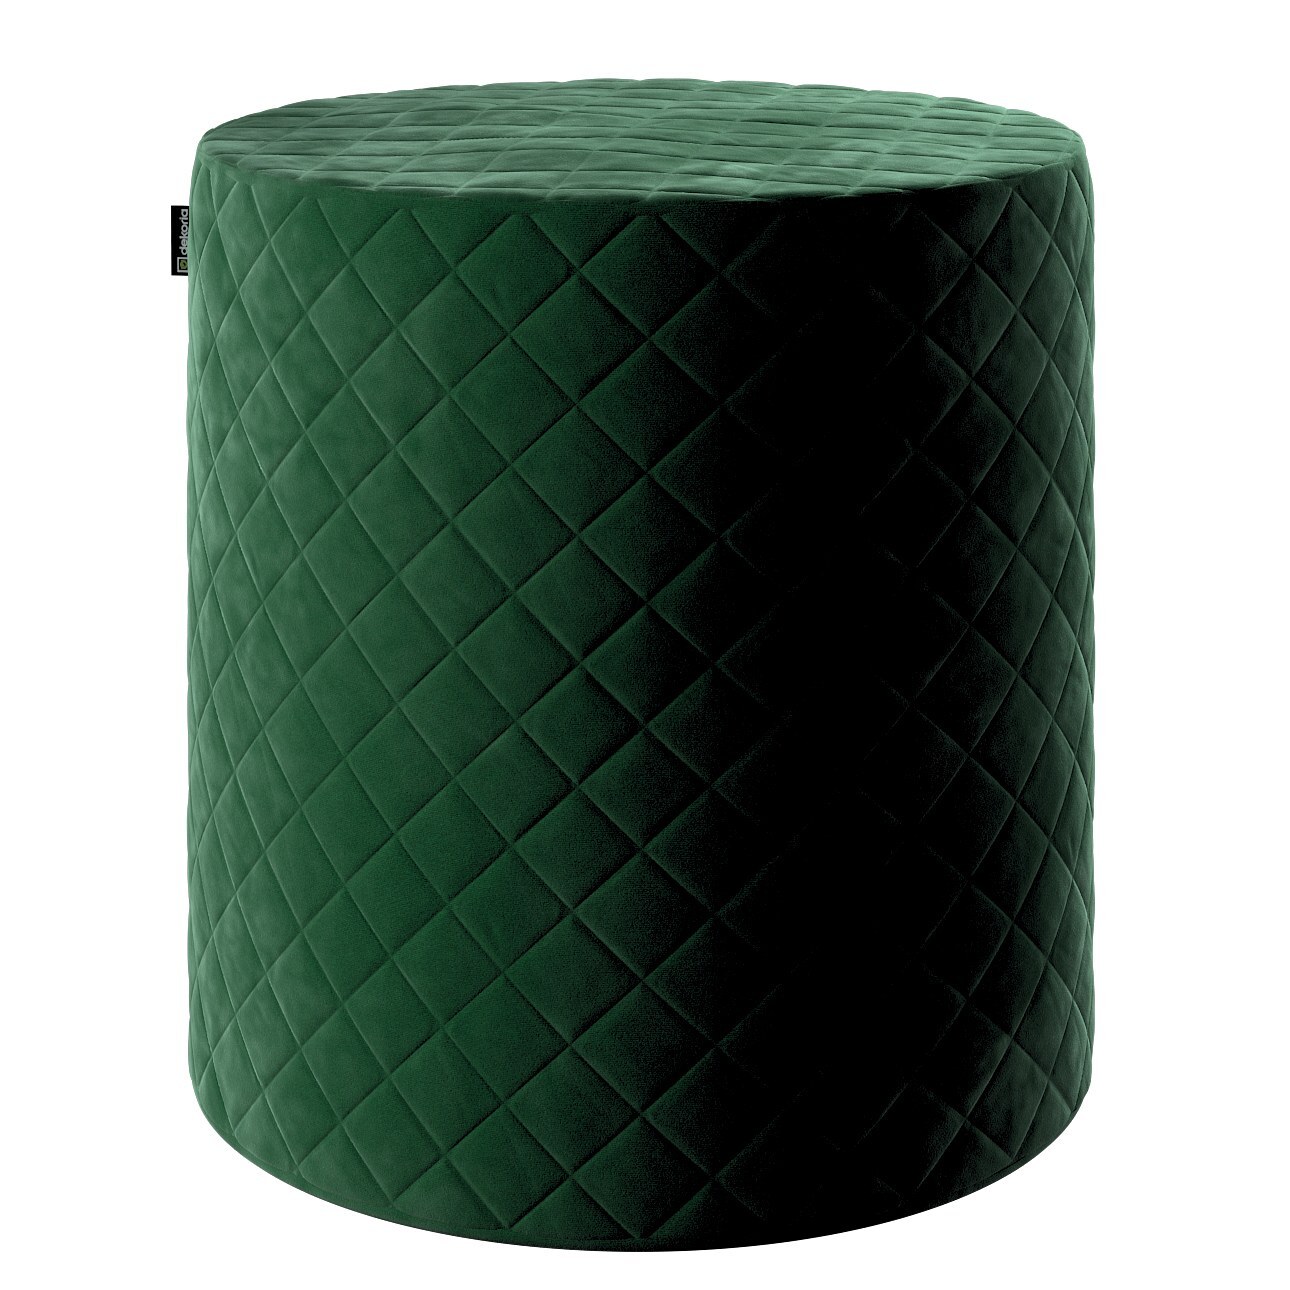 Pouf Barrel gesteppt, grün, ø 40 x 40 cm, Velvet (704-13) günstig online kaufen